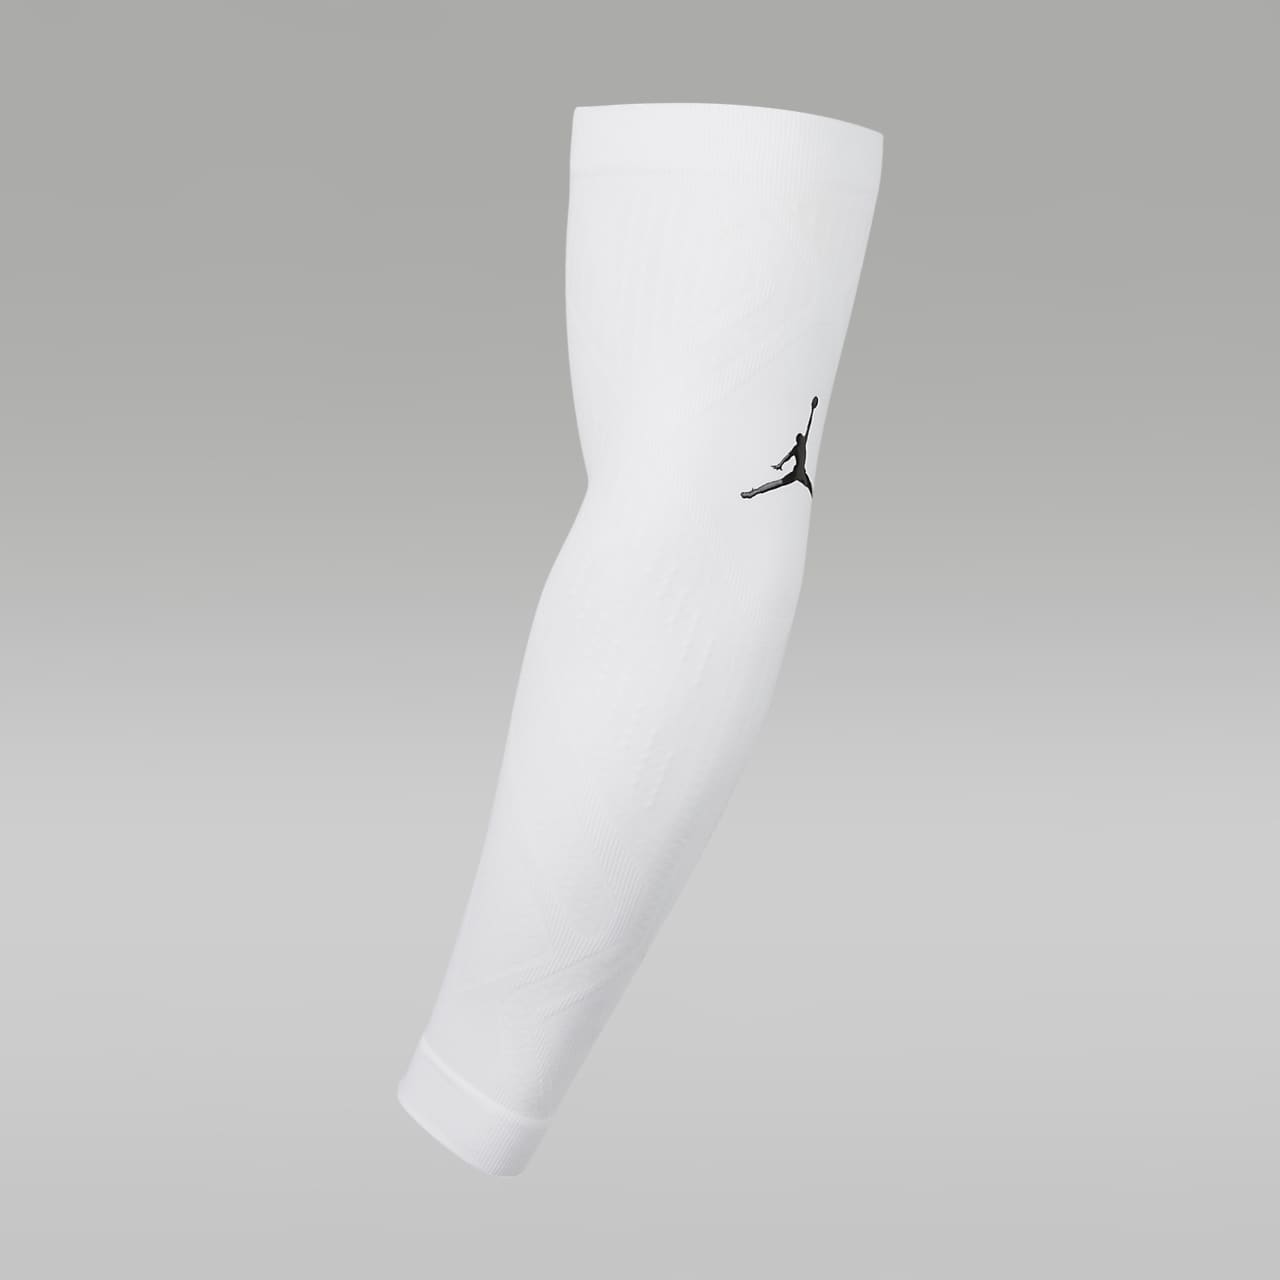 NIKE Jordan Basketball Arm Shooter Sleeve (Black/White, L/XL)